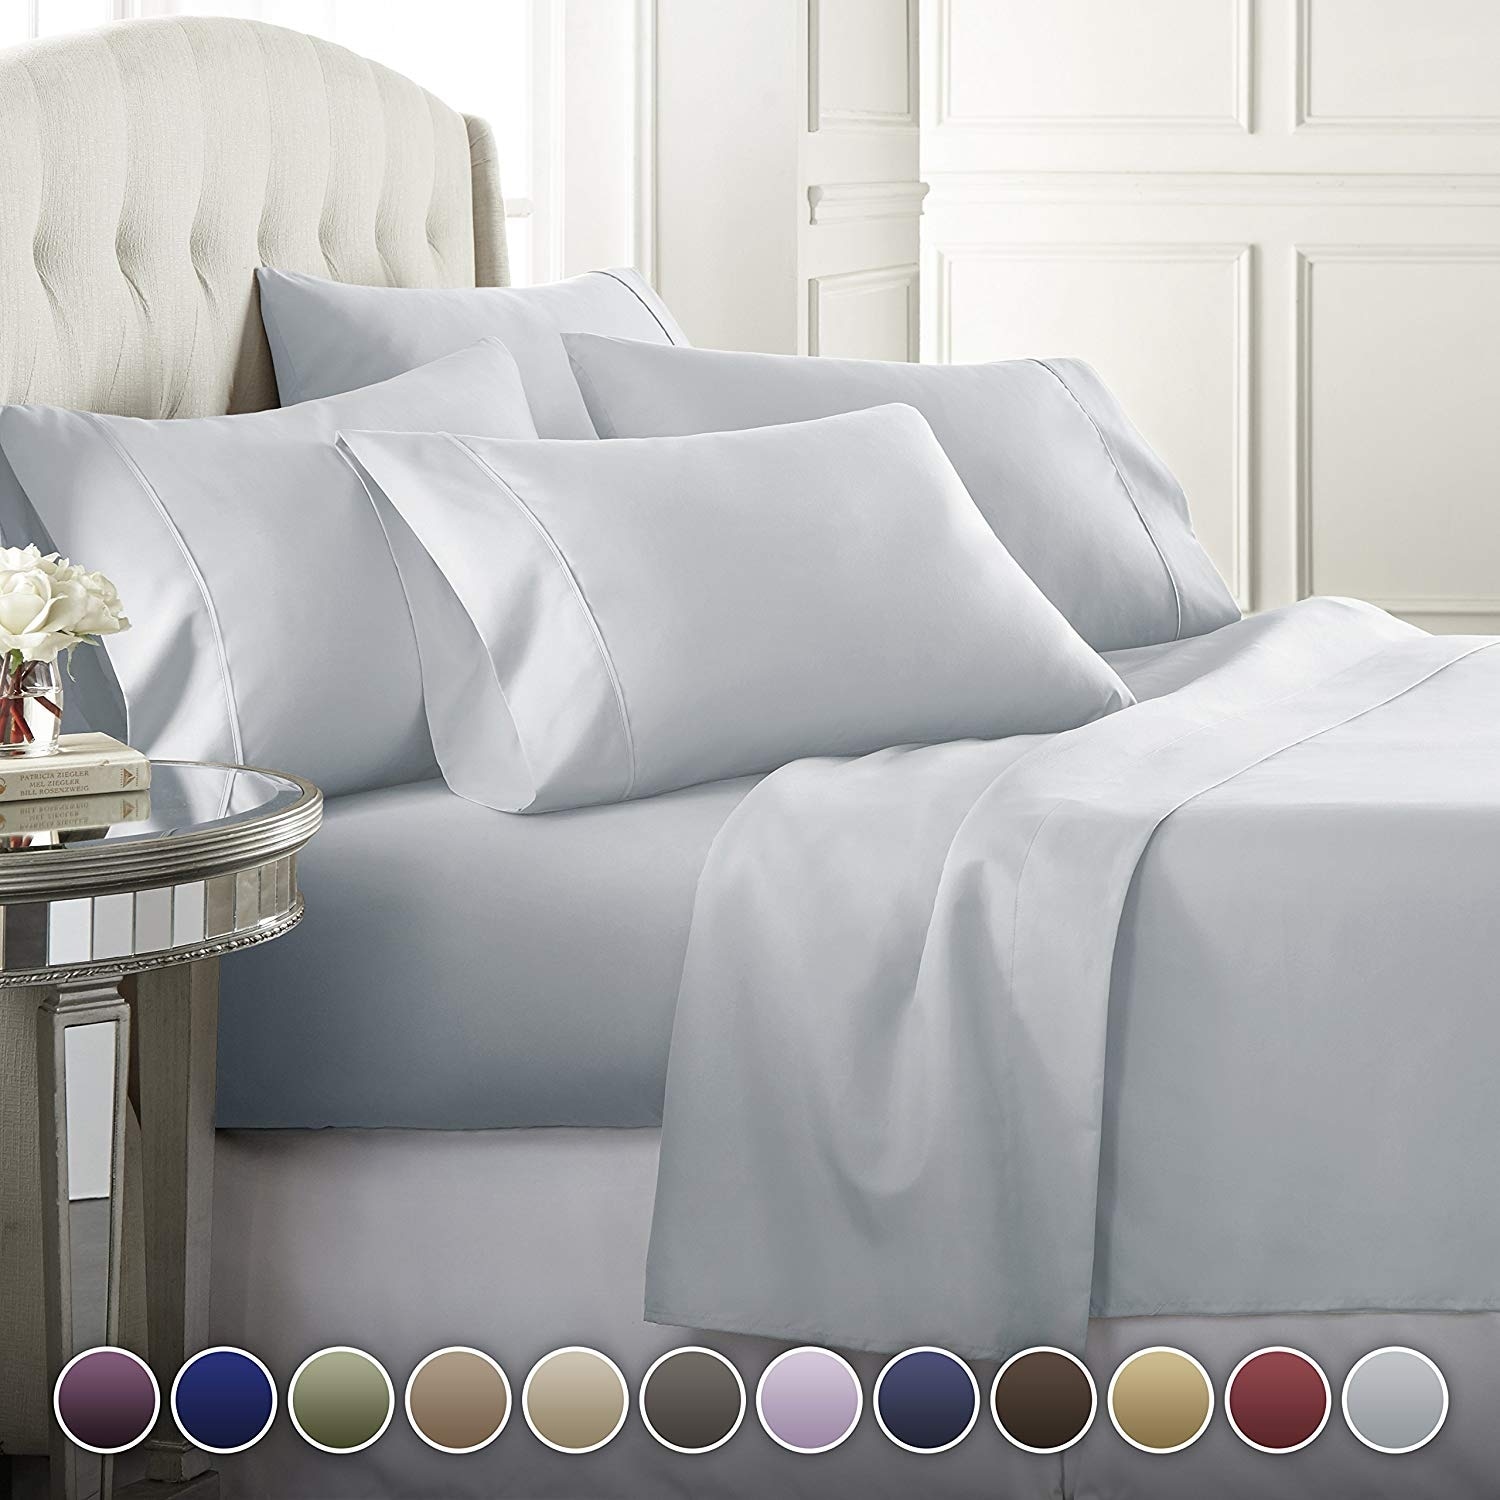 https://ak1.ostkcdn.com/images/products/is/images/direct/2c74d3f66e4dea73d3619128b32128651c20dbab/6-Piece-Hotel-Luxury-Soft-1800-Series-Premium-Bed-Sheets-Set.jpg